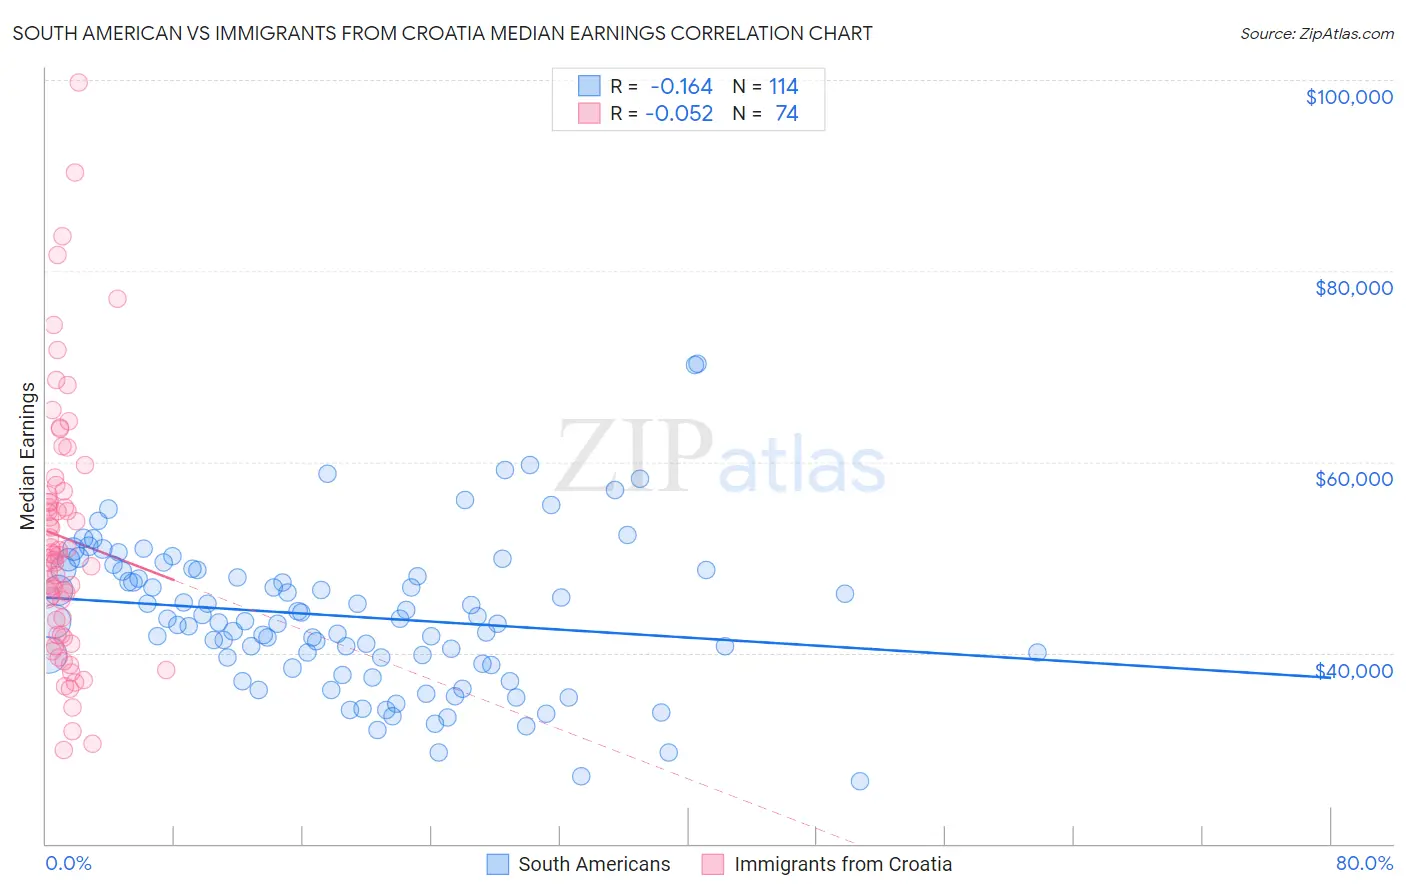 South American vs Immigrants from Croatia Median Earnings